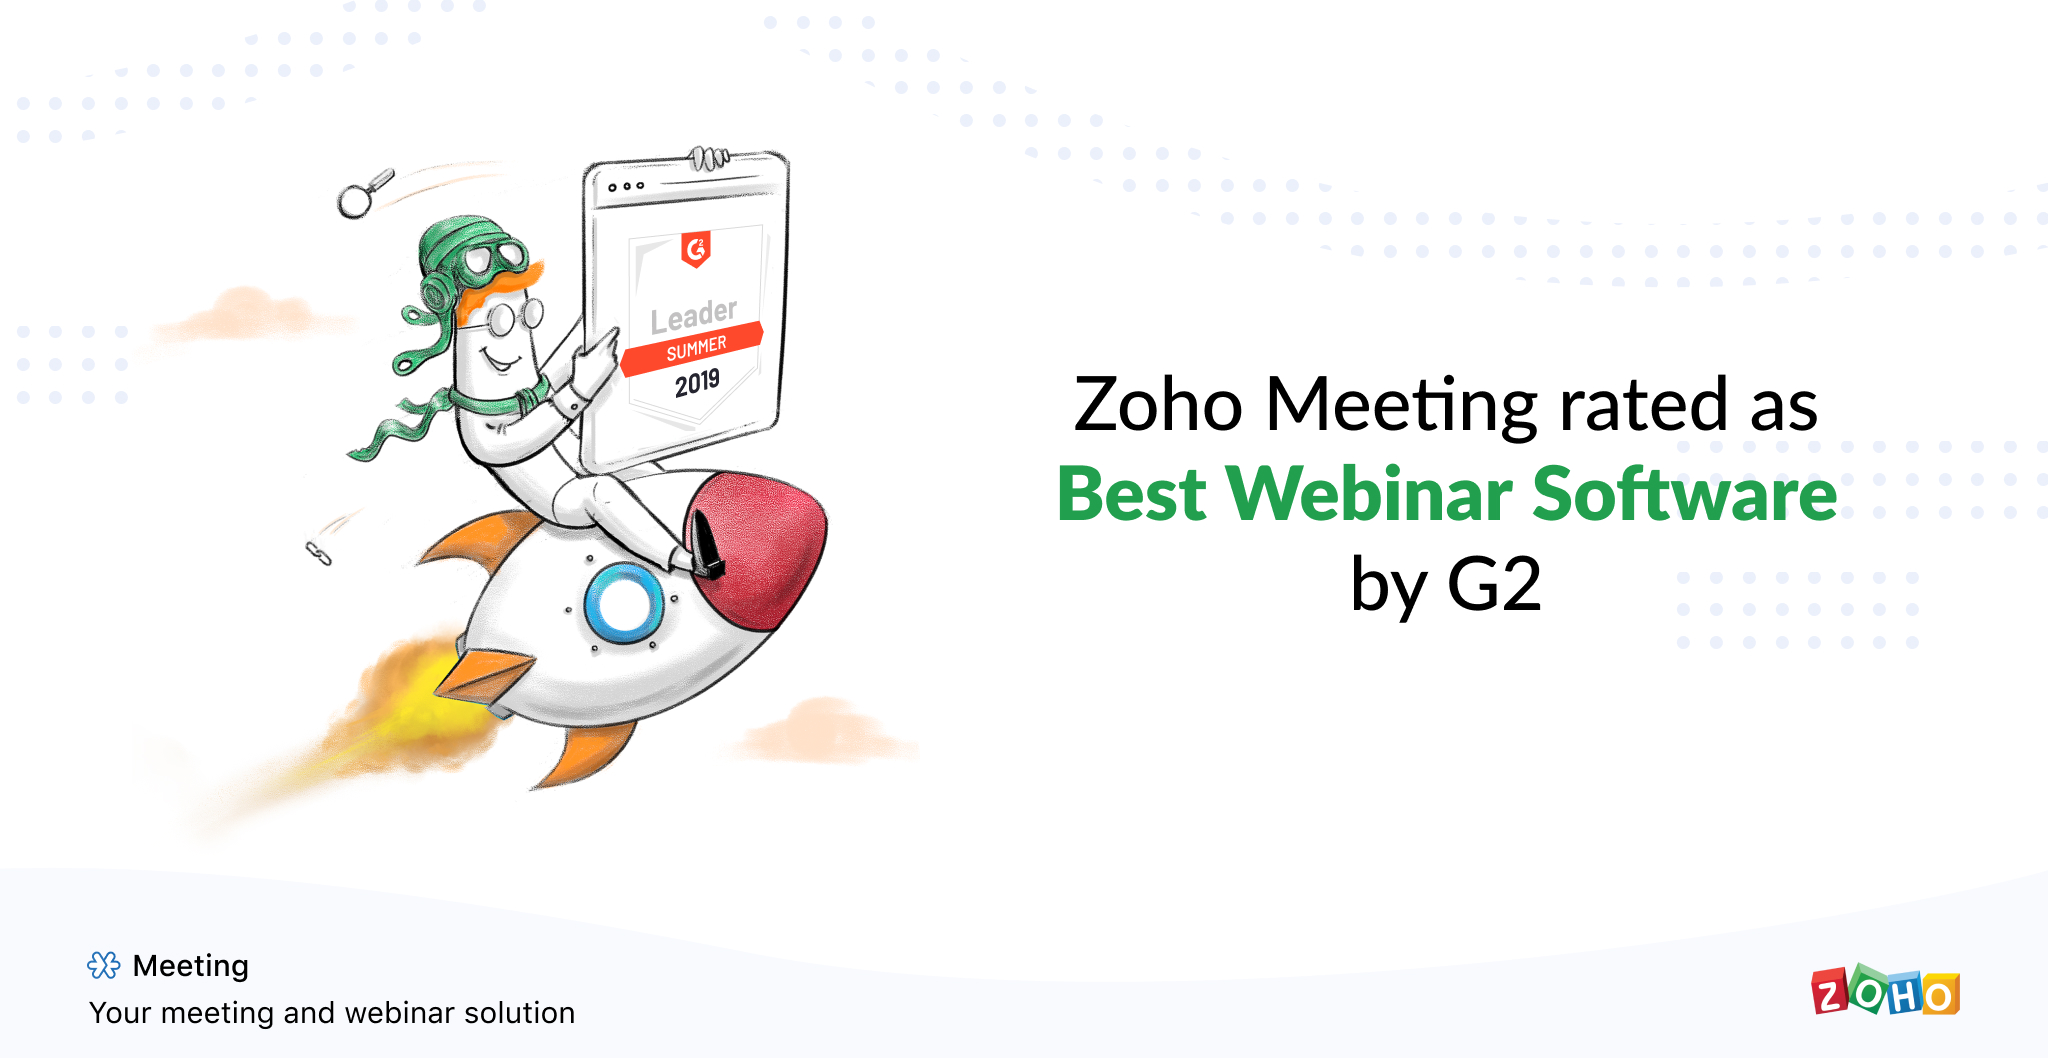 G2 names Zoho Meeting a 2019 Leader in Best Webinar Software